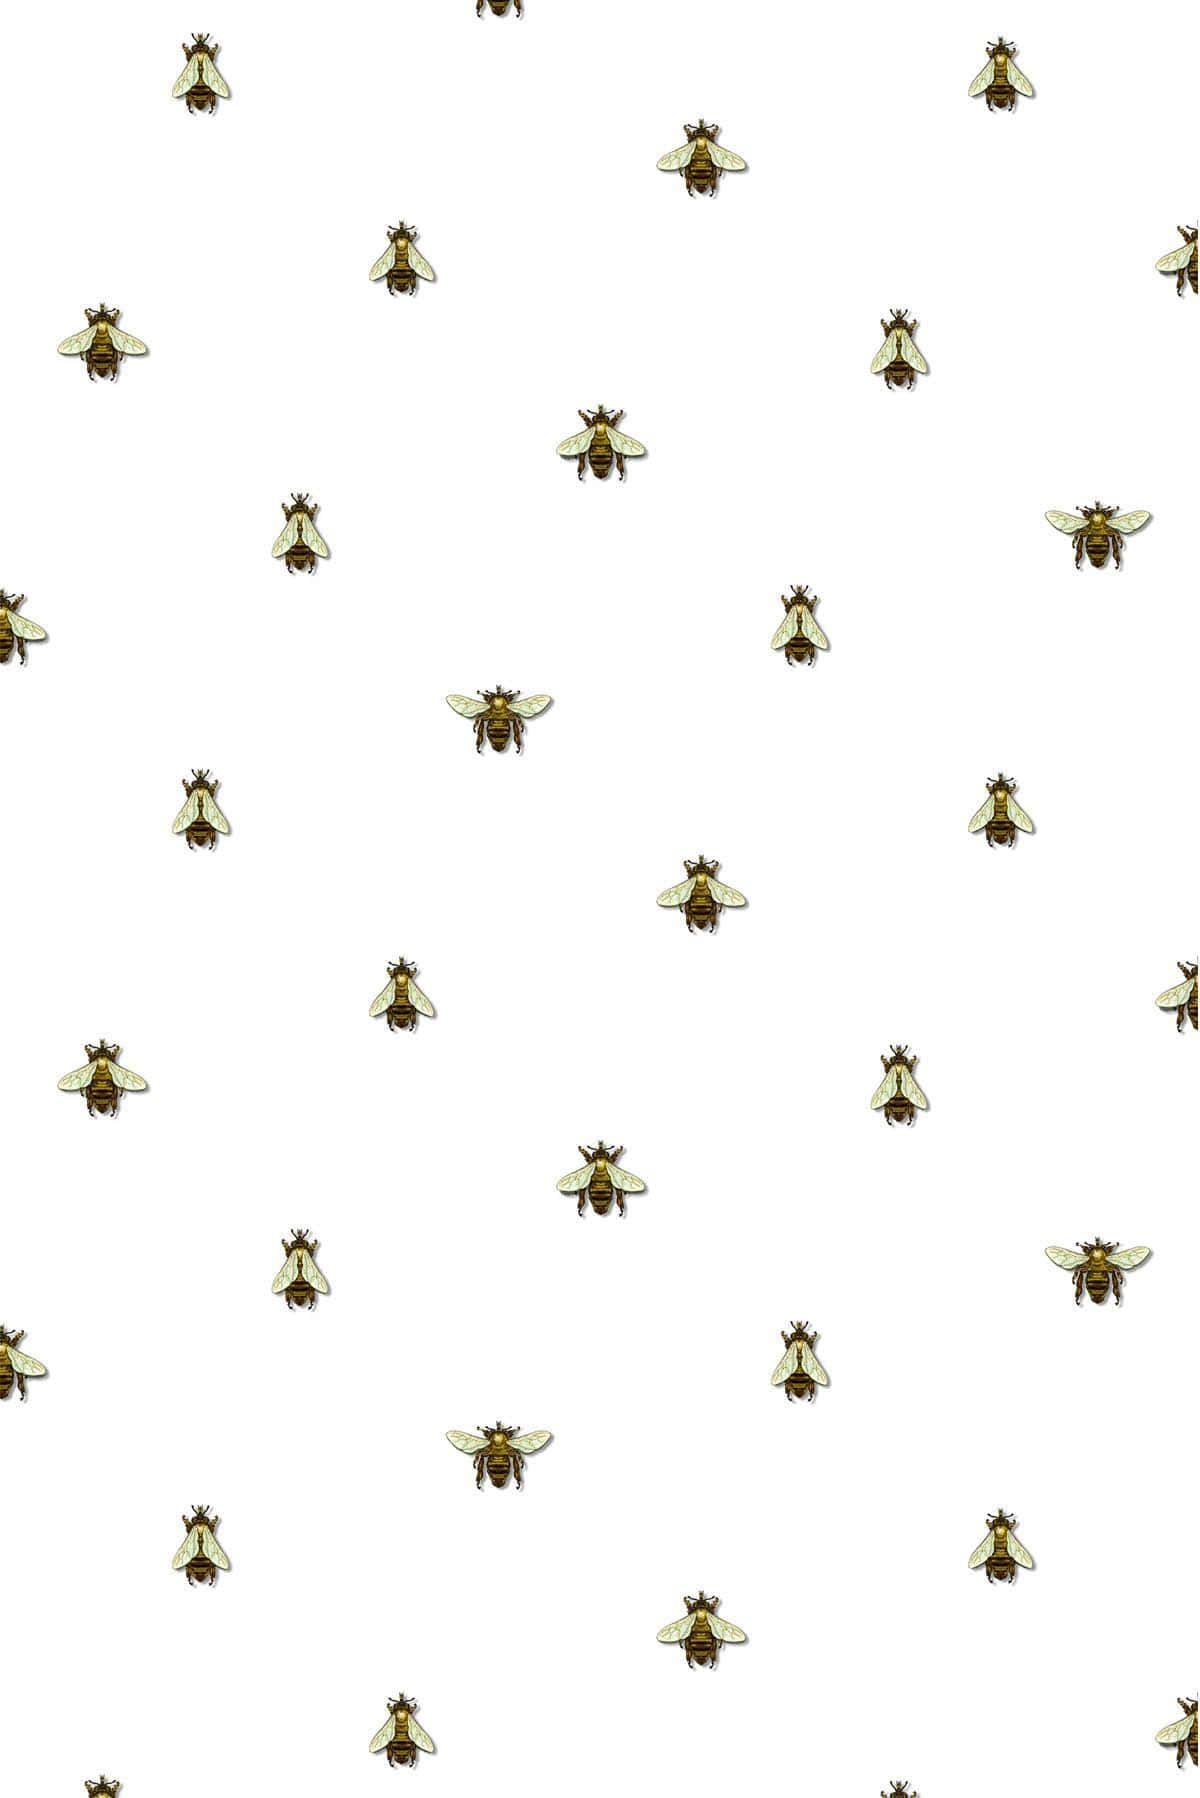 Small Bee Rain Like Pattern Iphone Wallpaper